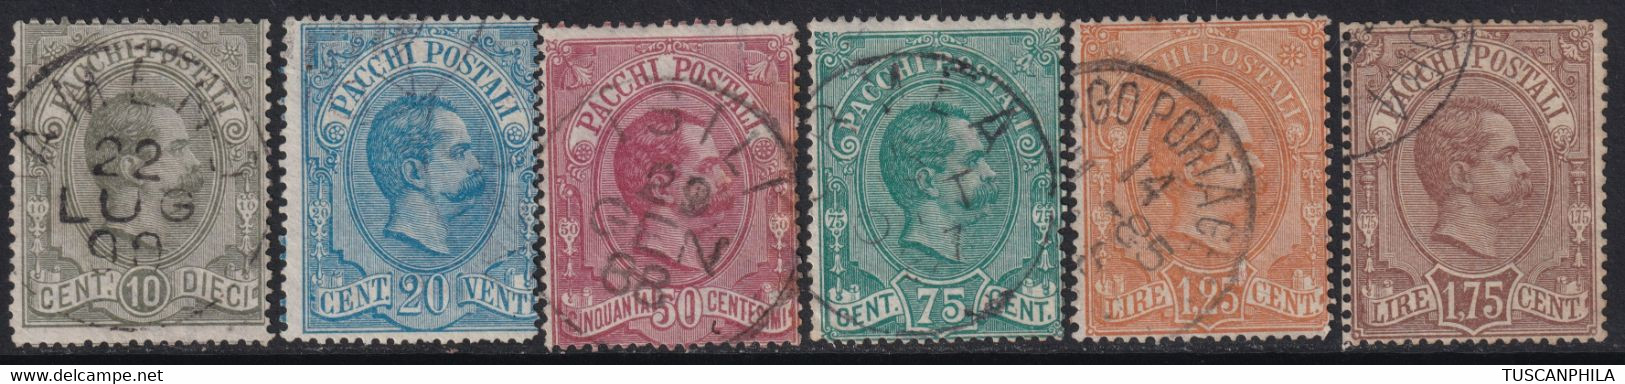 1884/86 - Umberto Pacchi Postali Serie Completa Usata F.Ray, Colla - Sassone S.2100 - Paquetes Postales